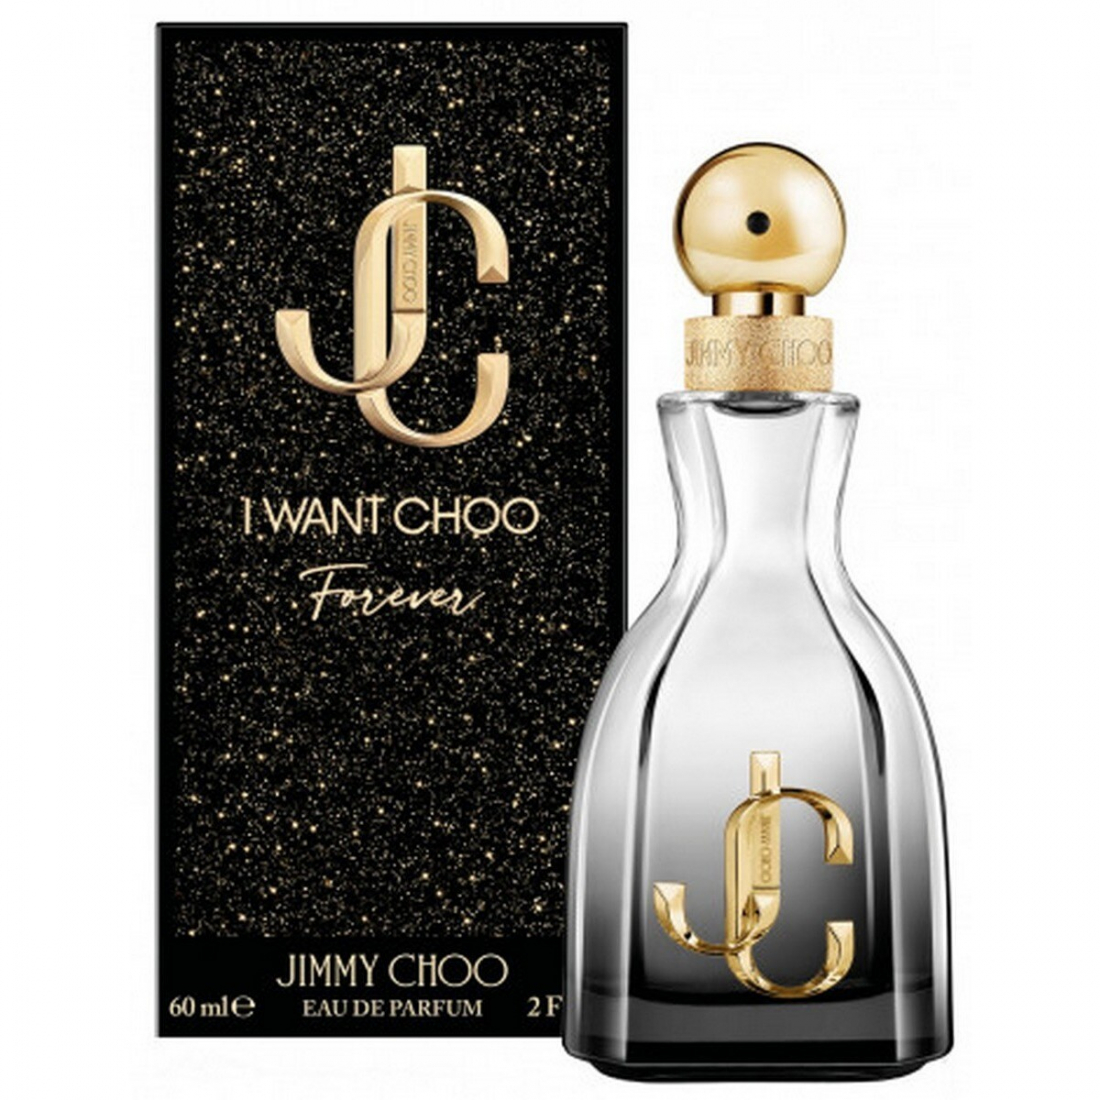 'I Want Choo Forever' Eau de parfum - 60 ml